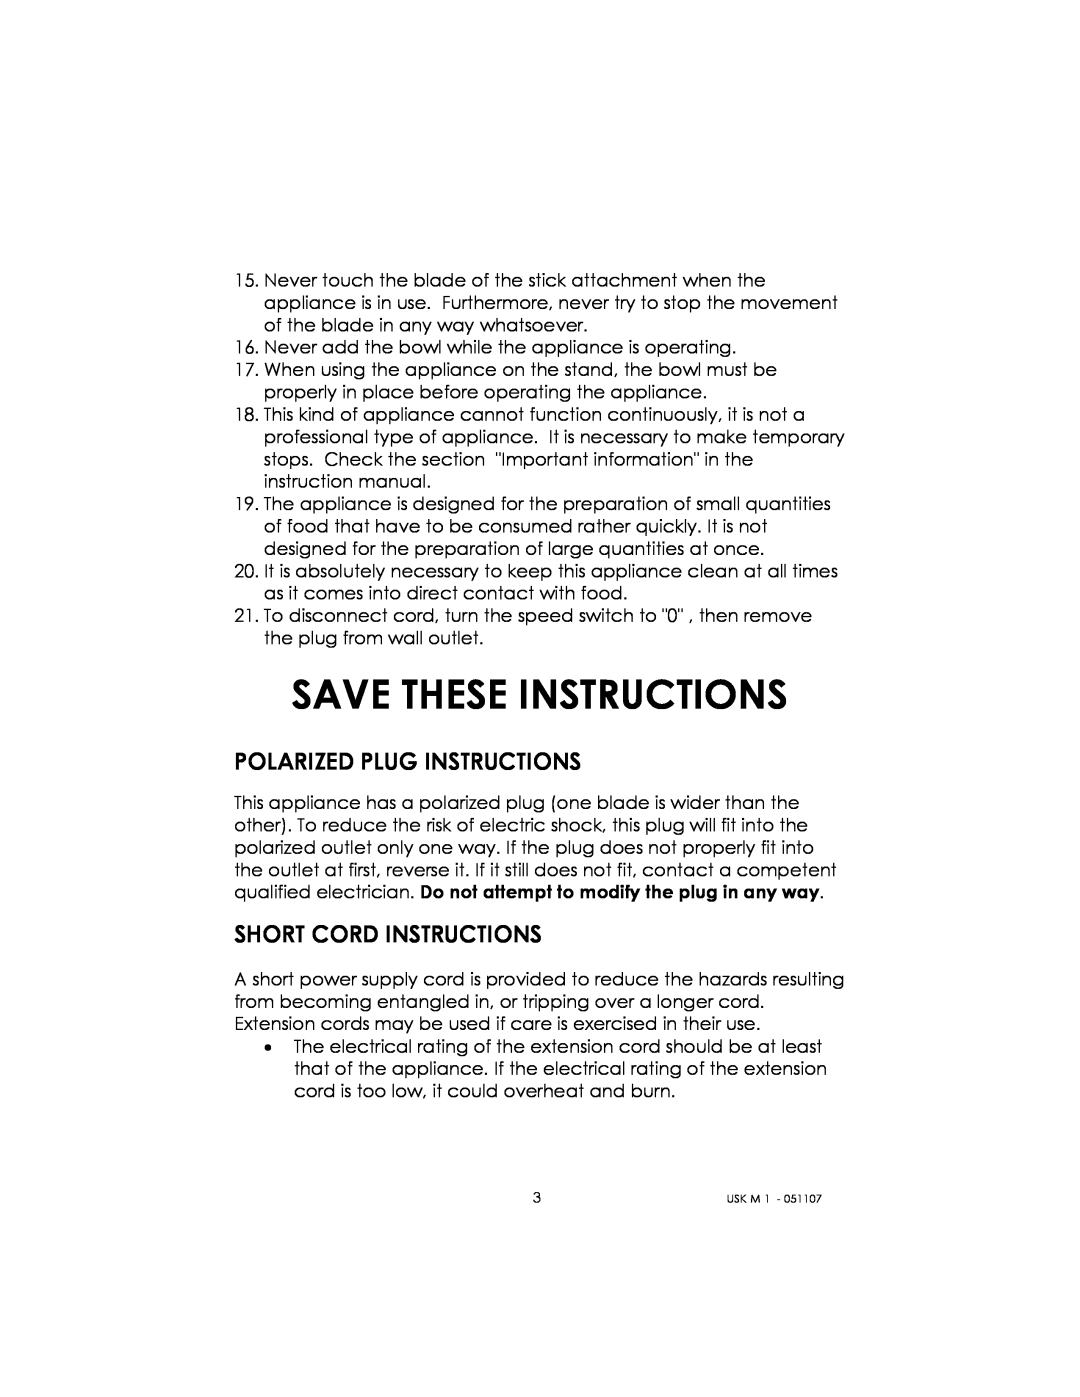 Kalorik USK M 1 manual Save These Instructions, Polarized Plug Instructions, Short Cord Instructions 